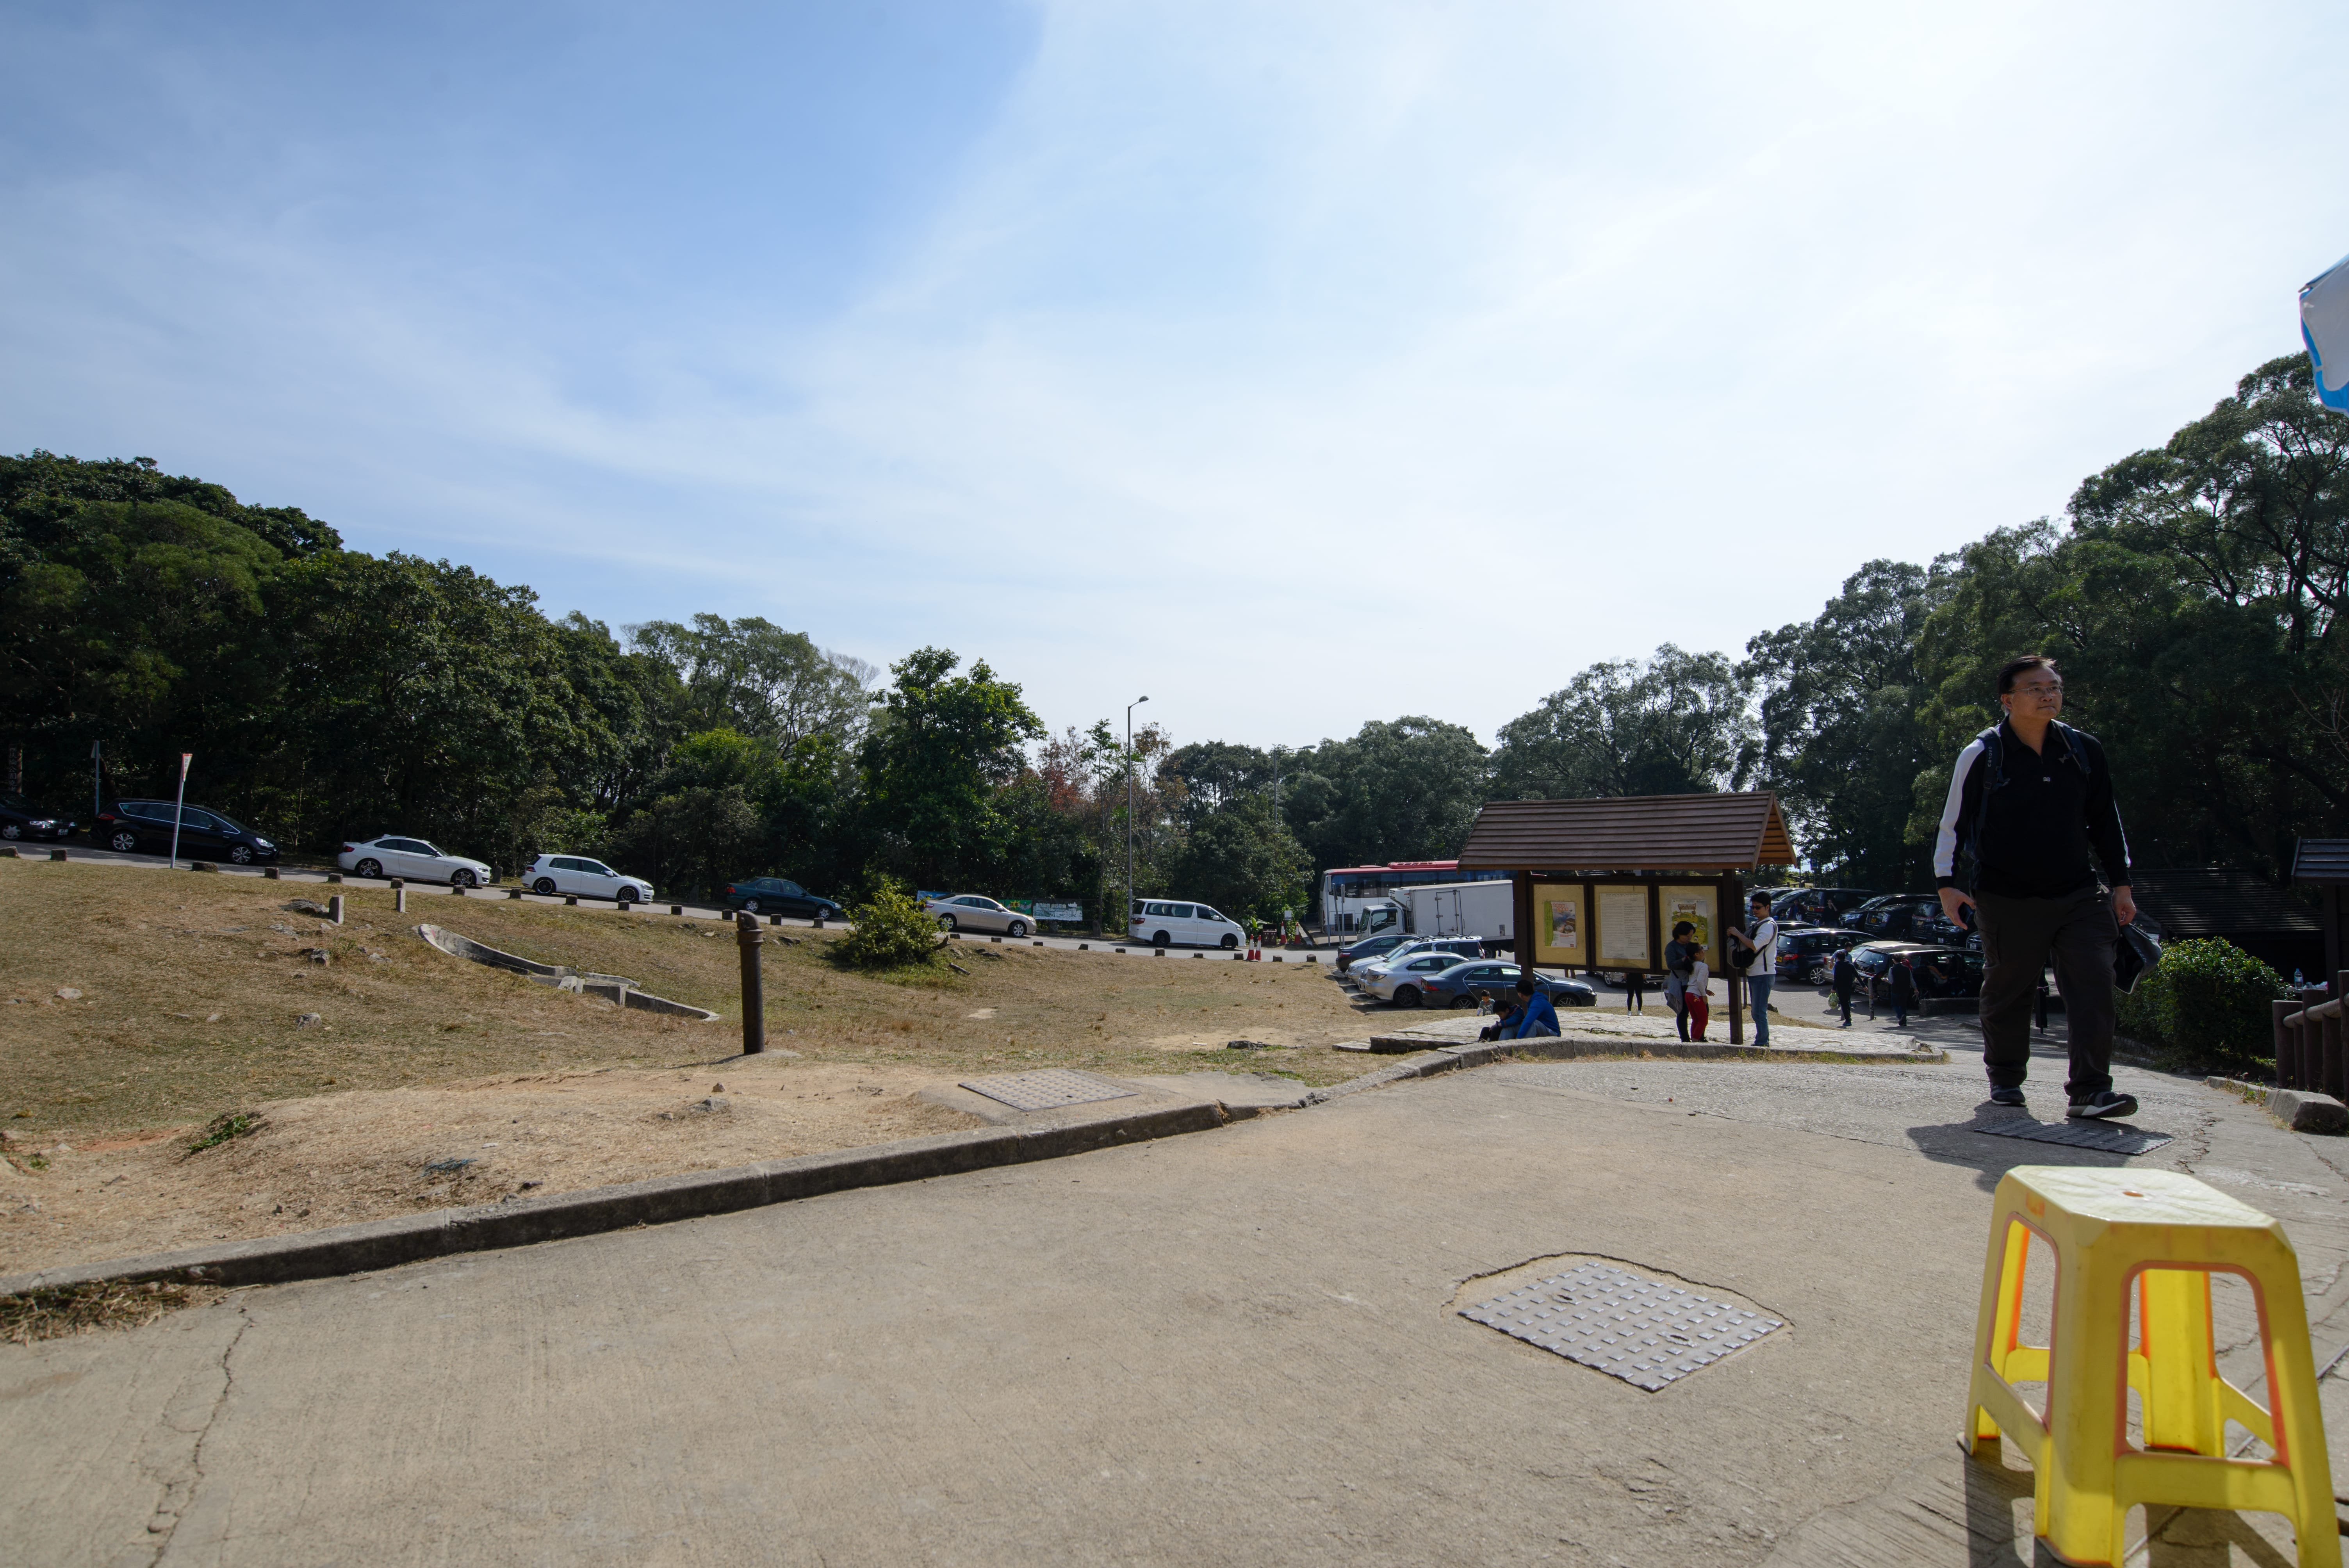 Rotary Club Park and public Carpark, Tai Mo Shan Road